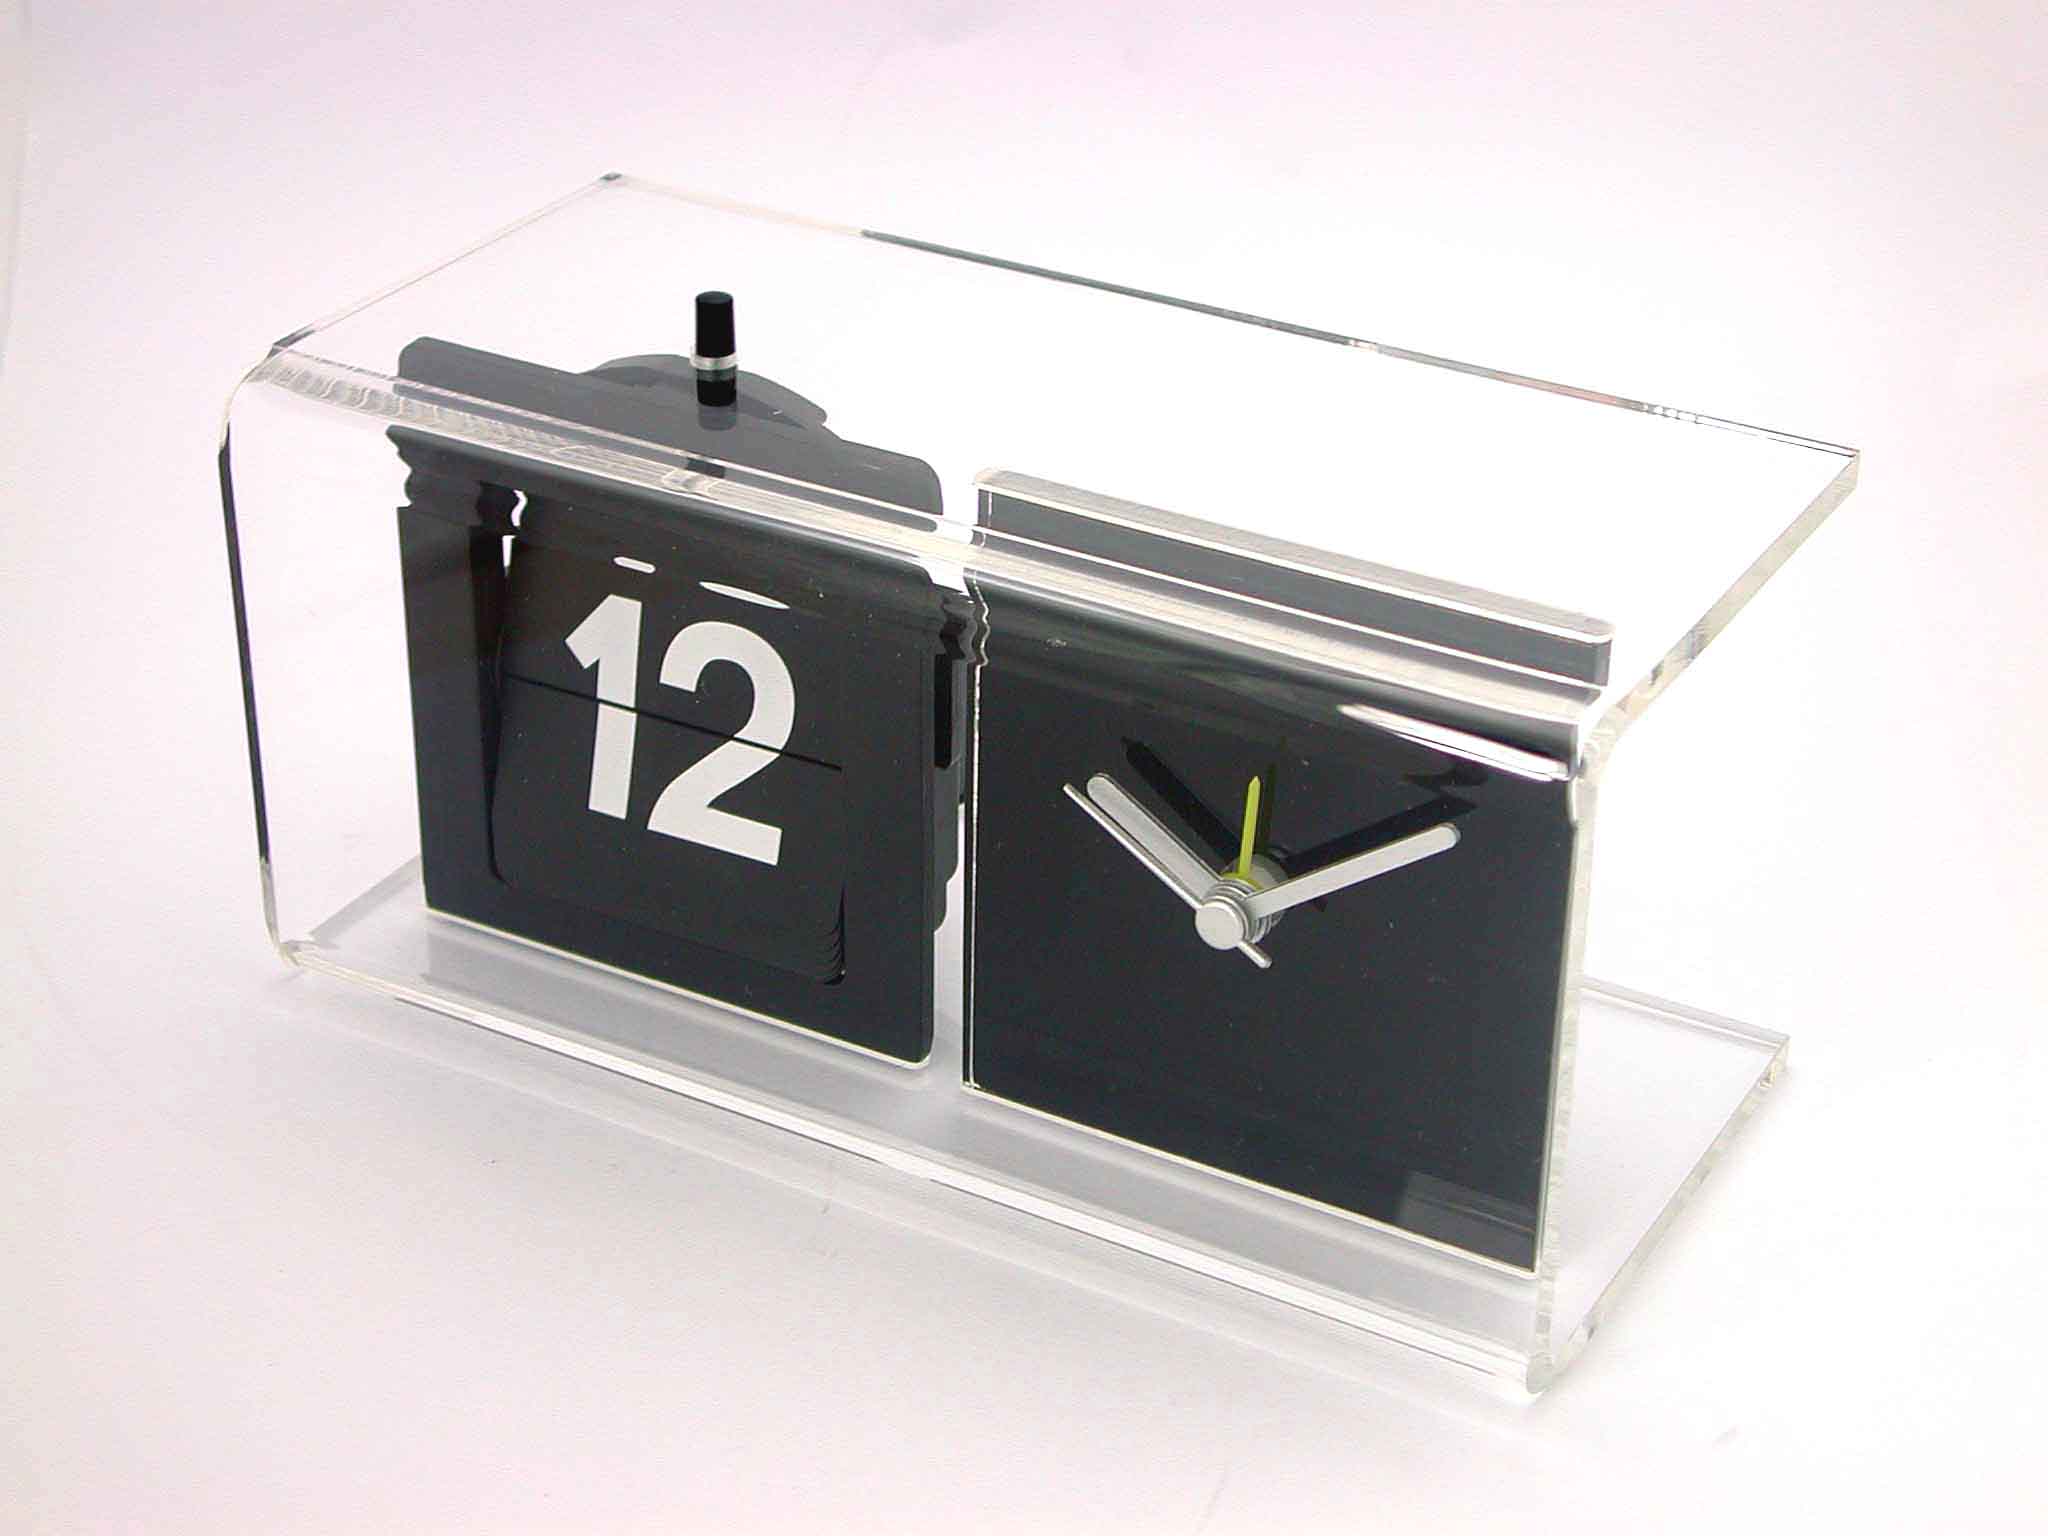  our item - Acrylic Analog Clock With Calendar ( our item - Acrylic Analog Clock With Calendar)